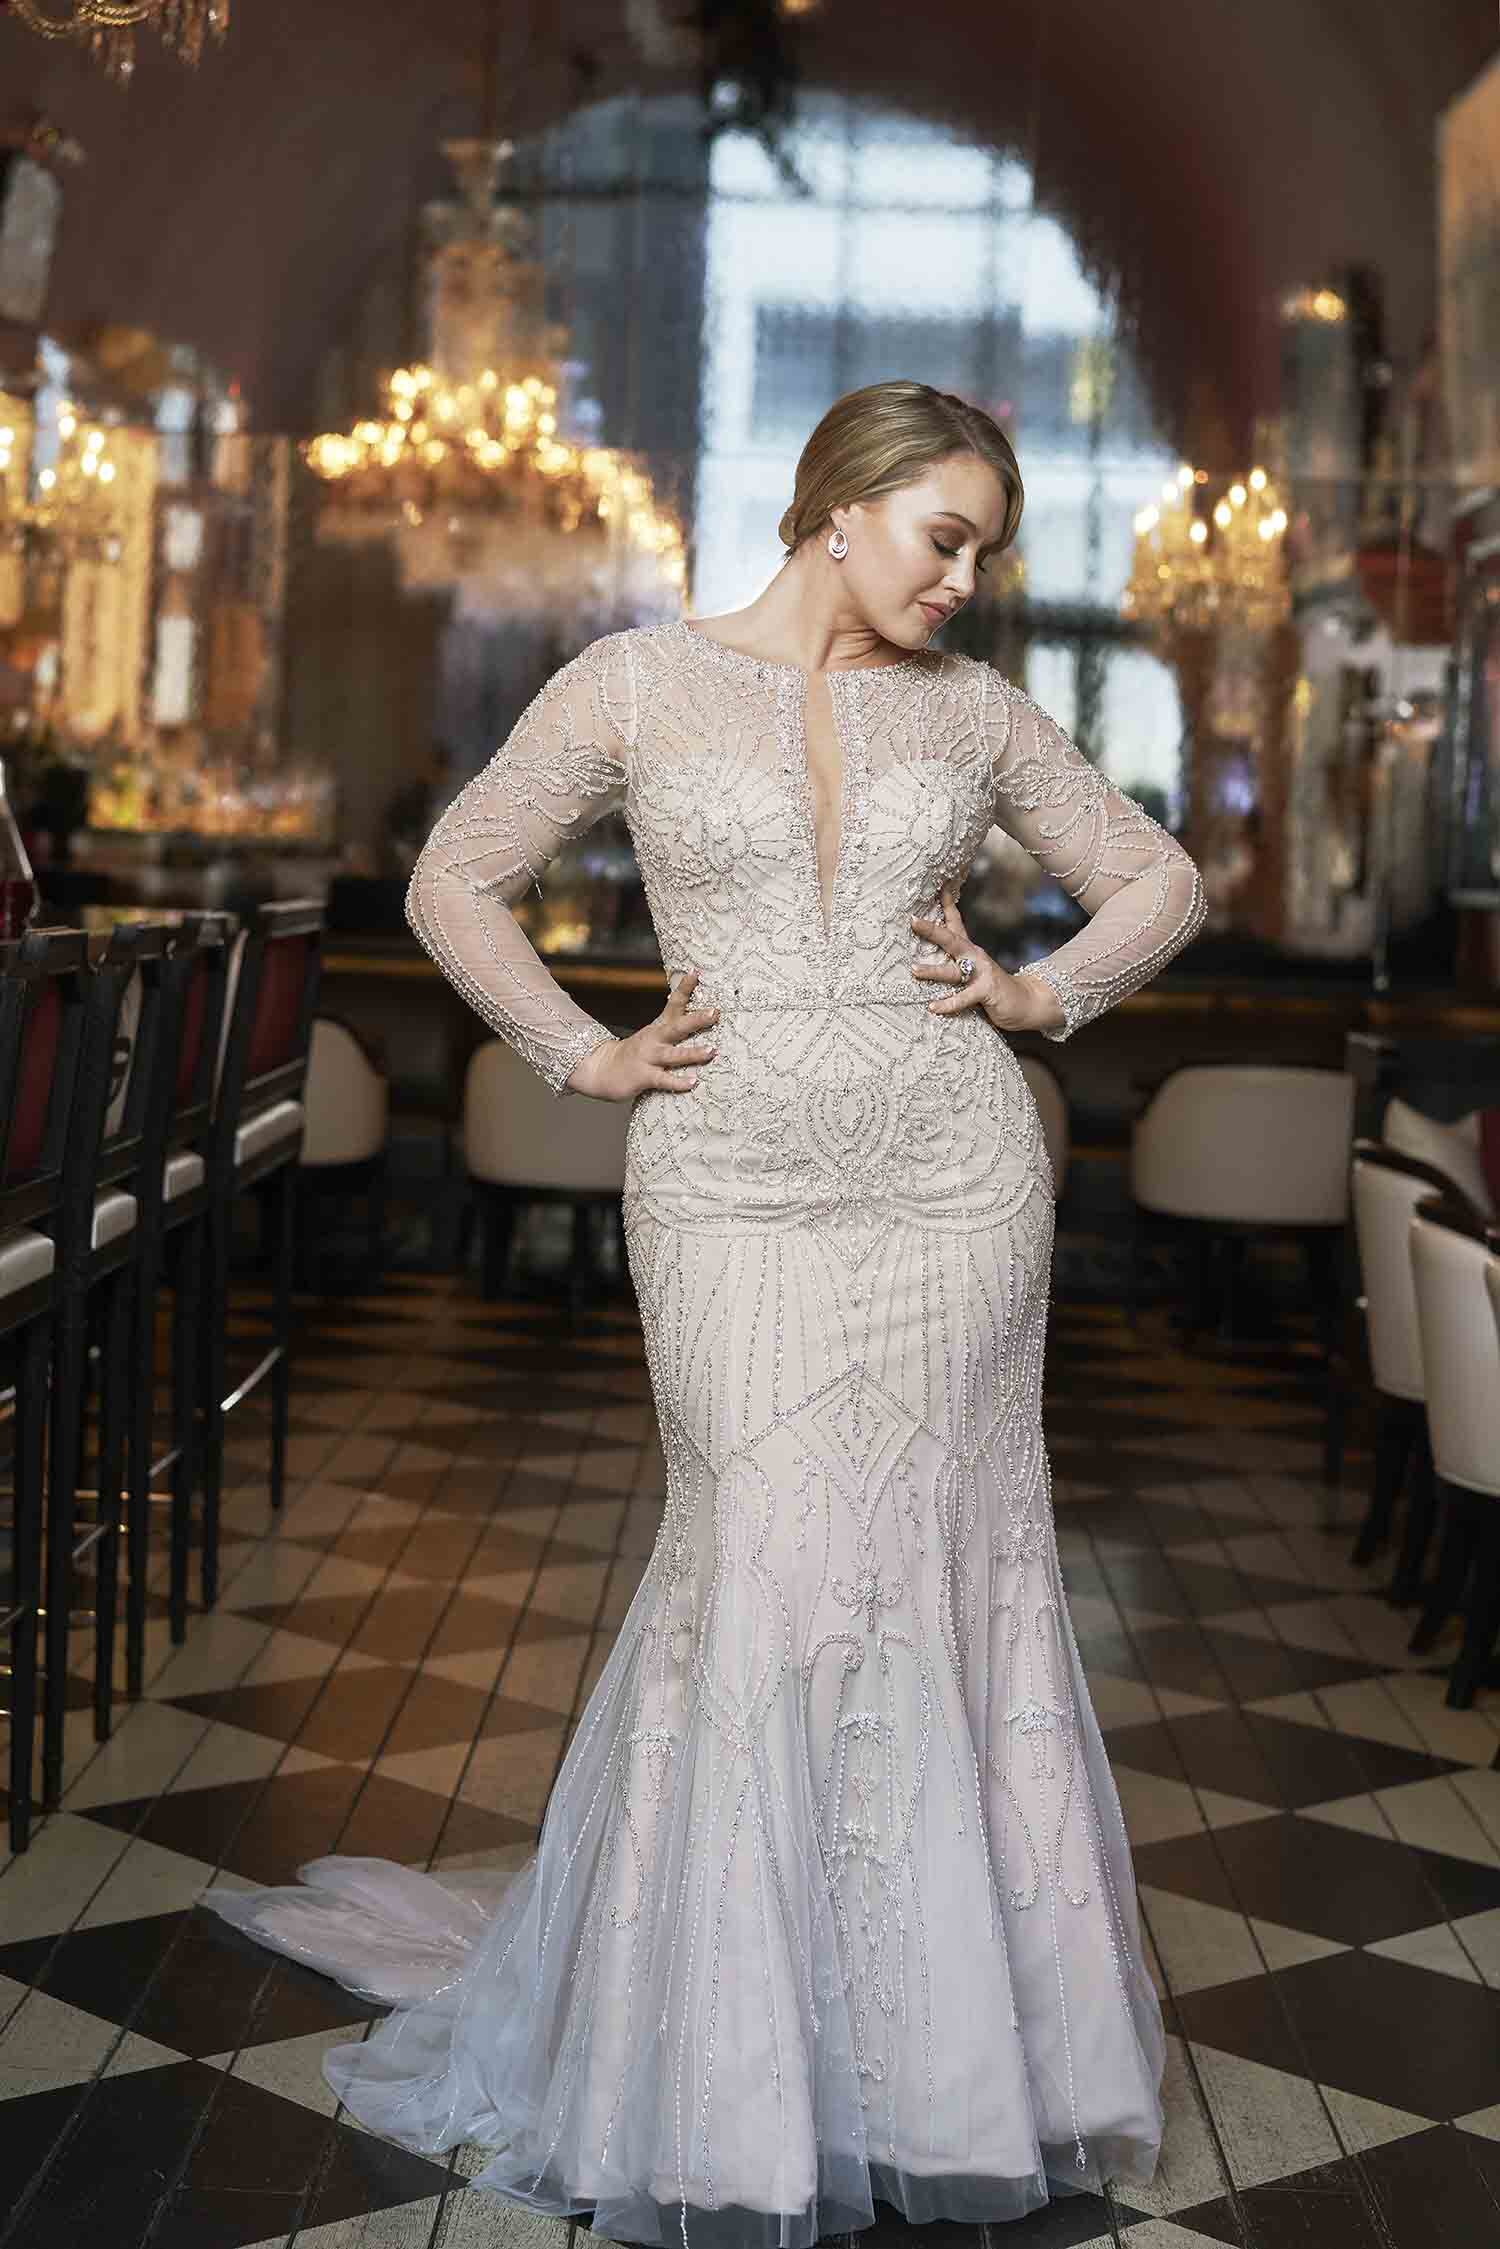 PlusSize Wedding Dresses Guide For Curvy Brides